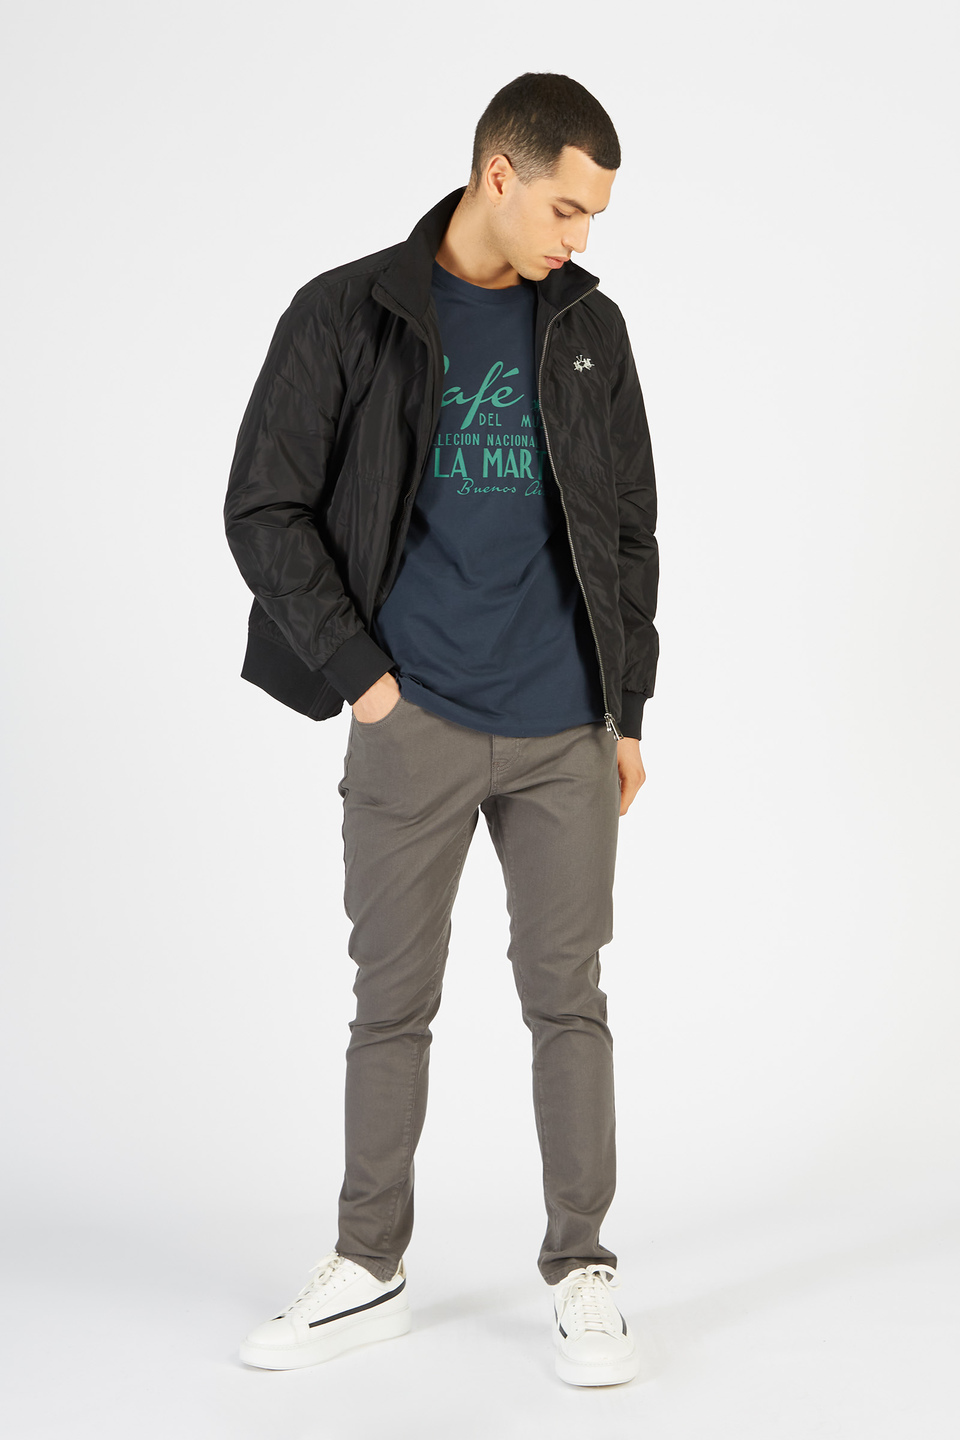 Men’s jacket in nylon regular fit model | La Martina - Official Online Shop